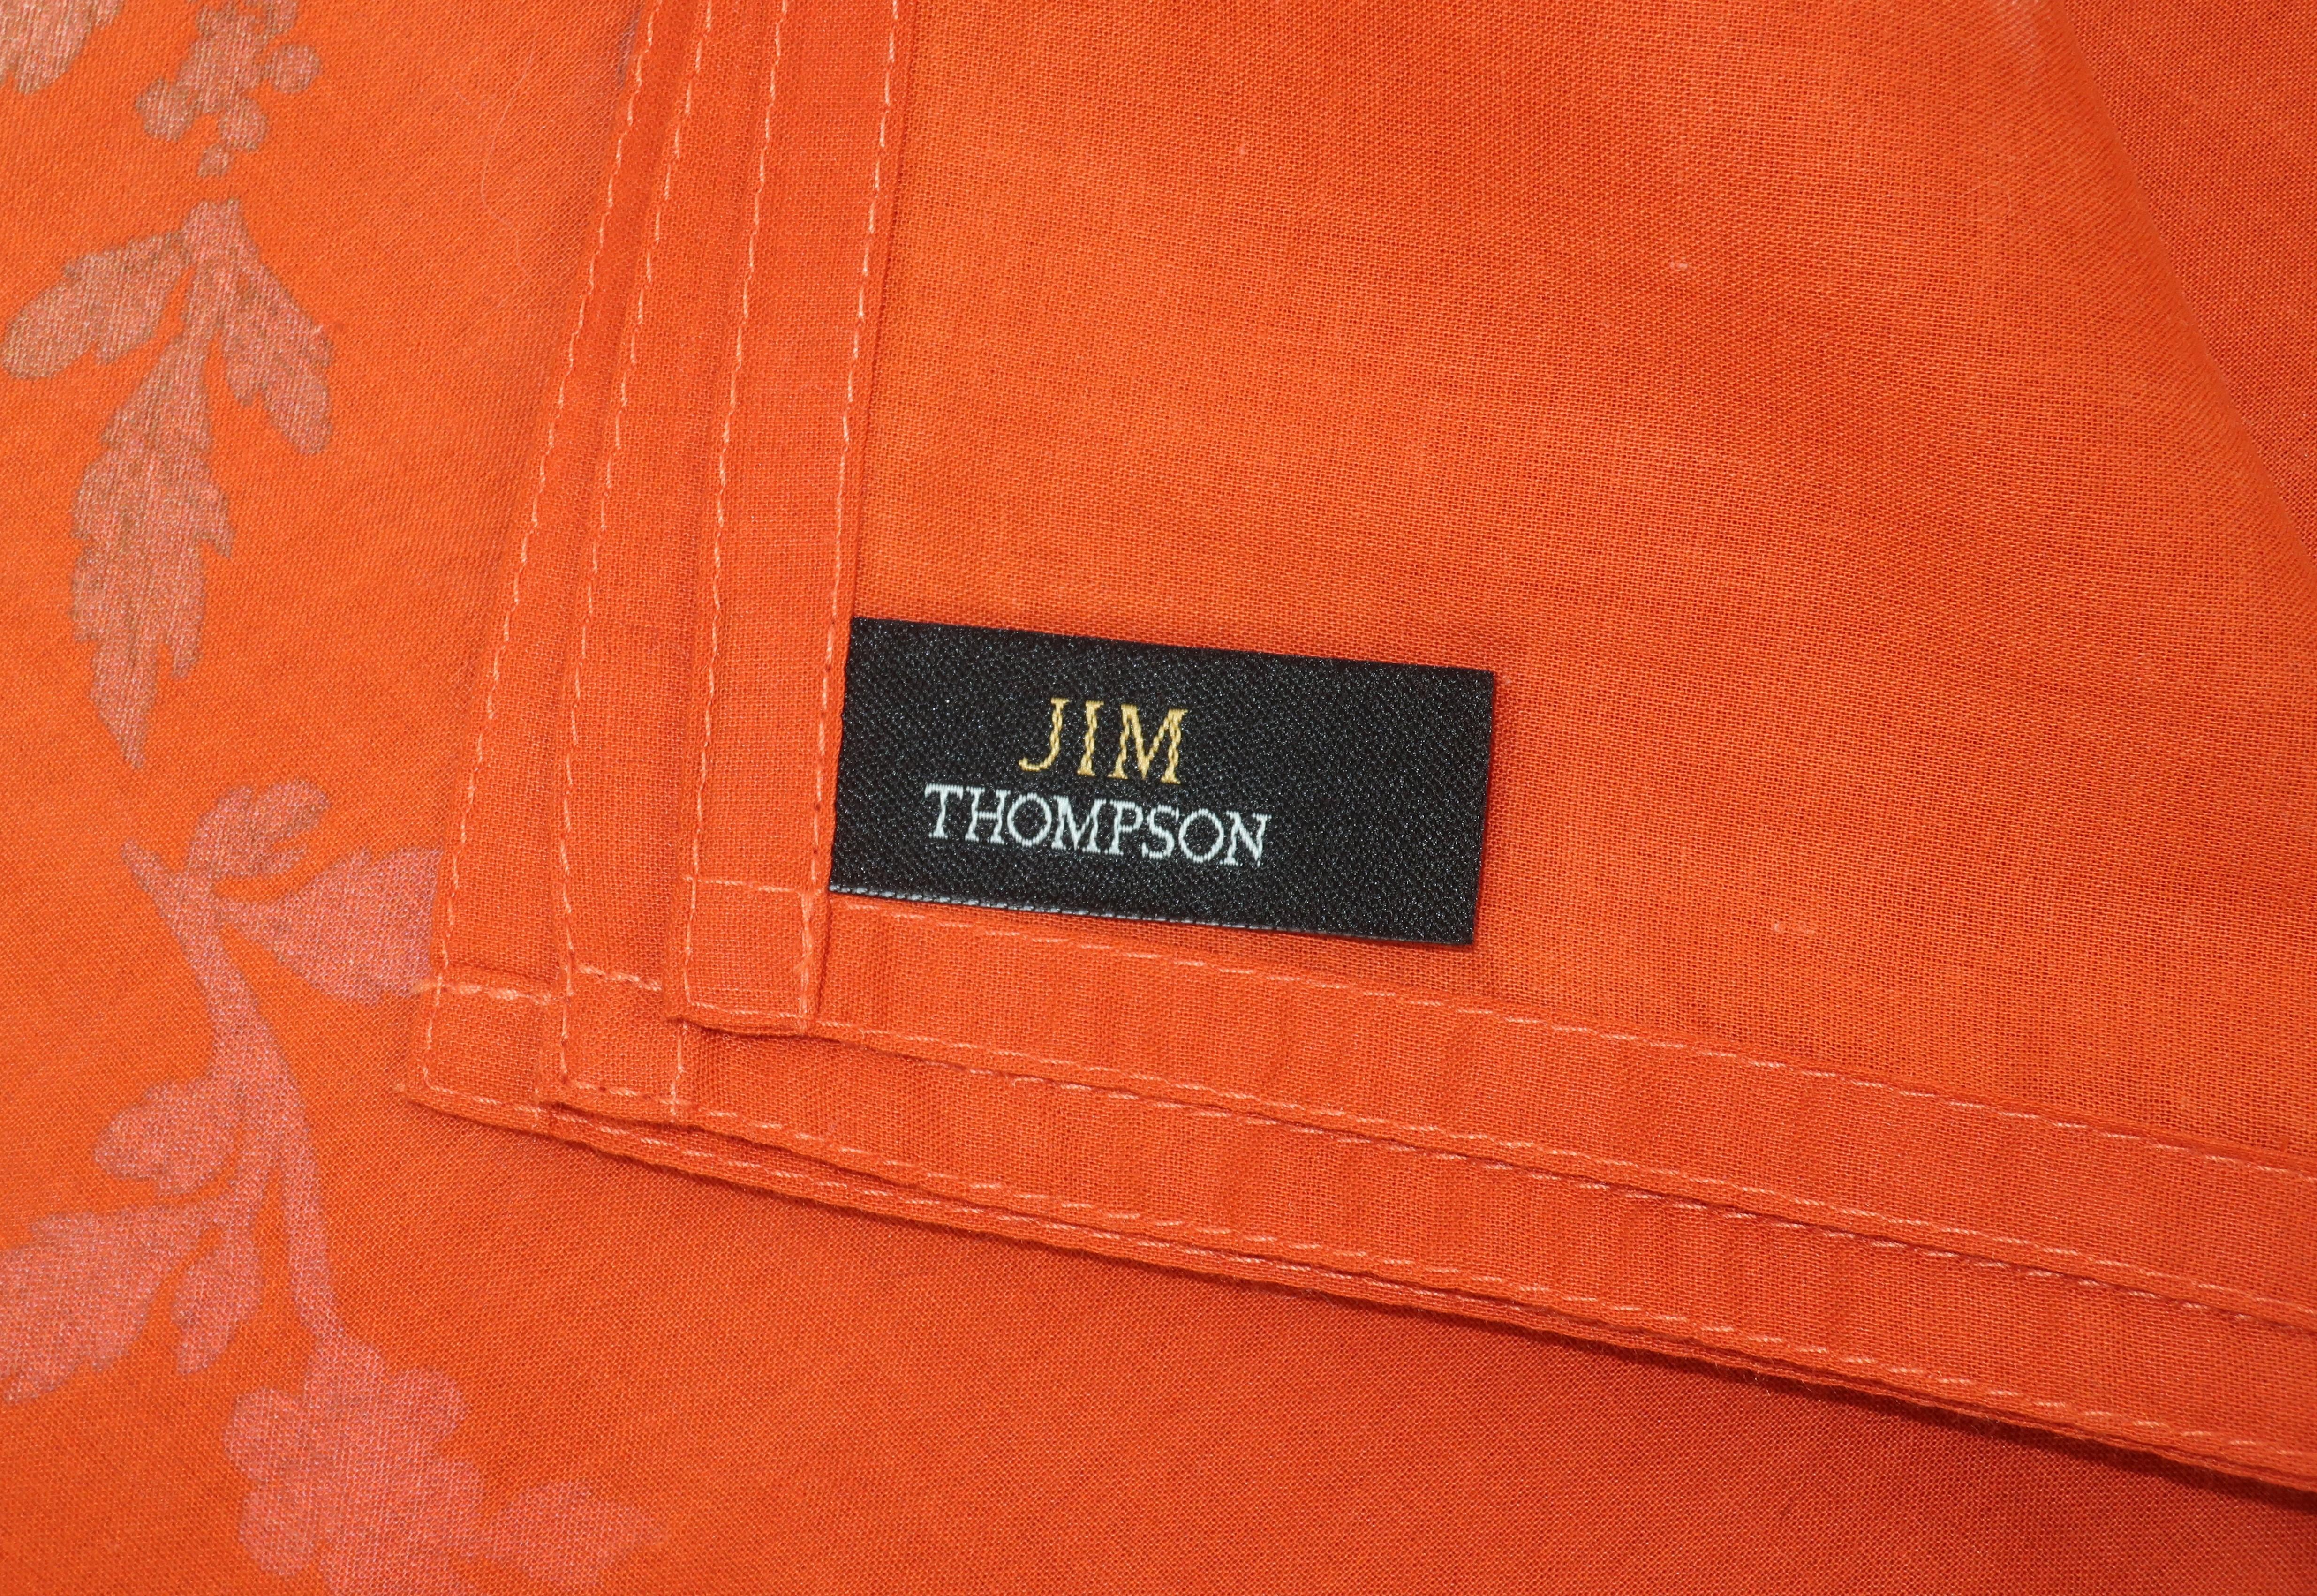 Jim Thompson Large Sarong Size Thai Cotton Scarf Wrap In Good Condition For Sale In Atlanta, GA